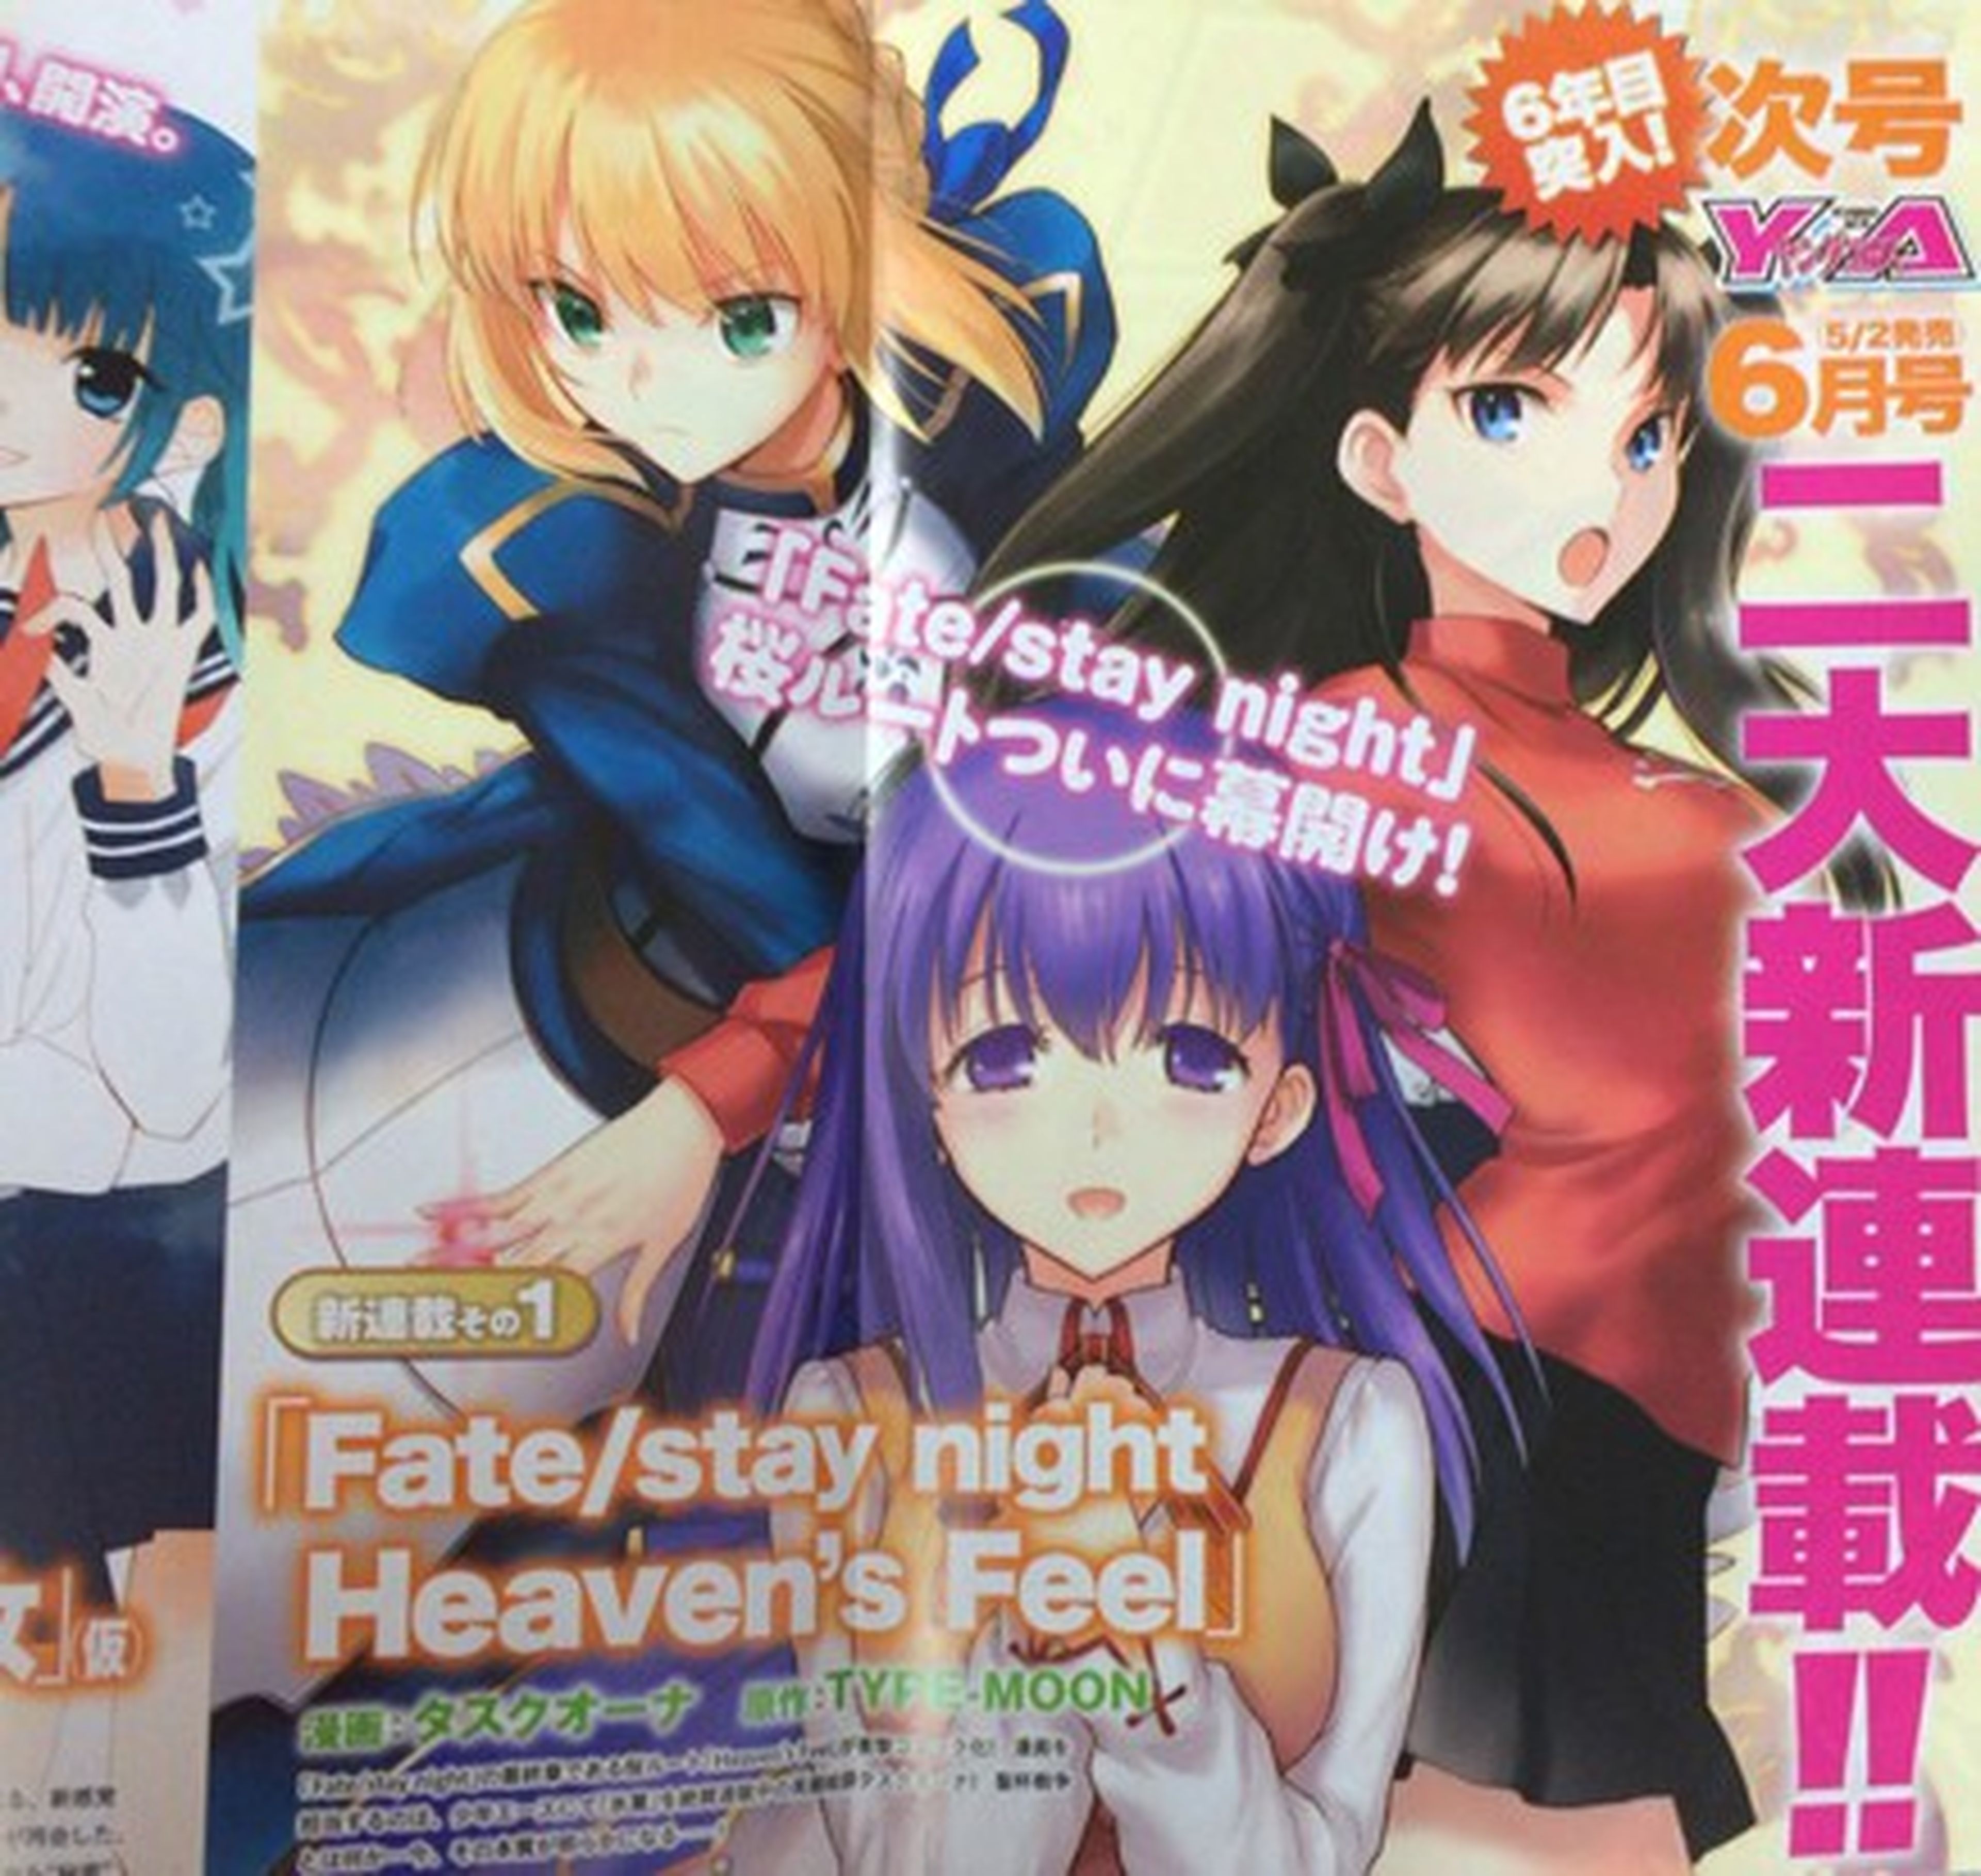 Fate/stay night: la ruta Heaven's Feel tendrá manga